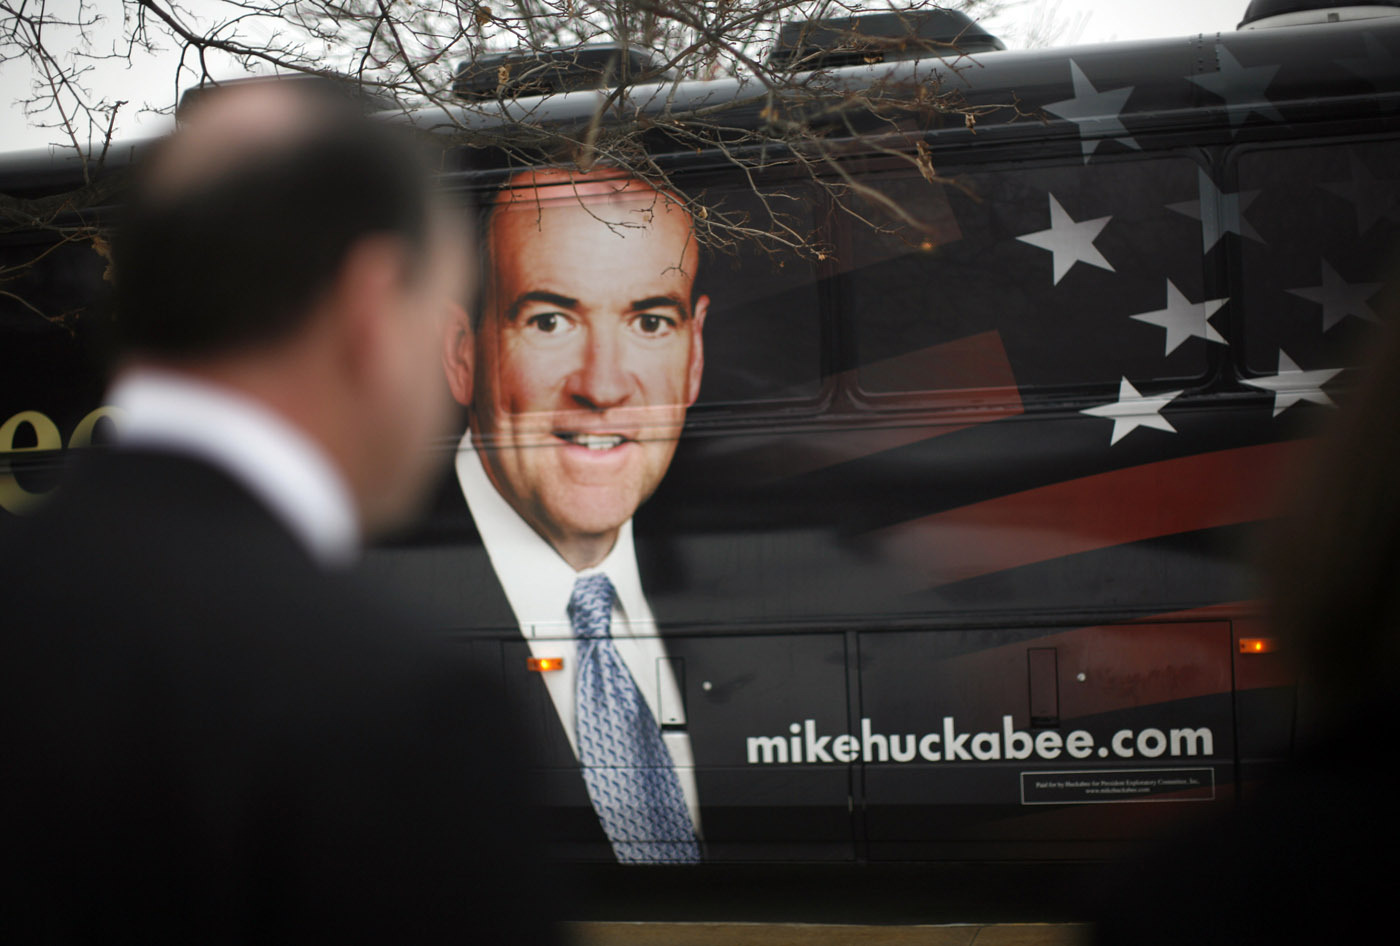 Mike Huckabee & bus, Iowa : The Presidents  : David Burnett | Photographer